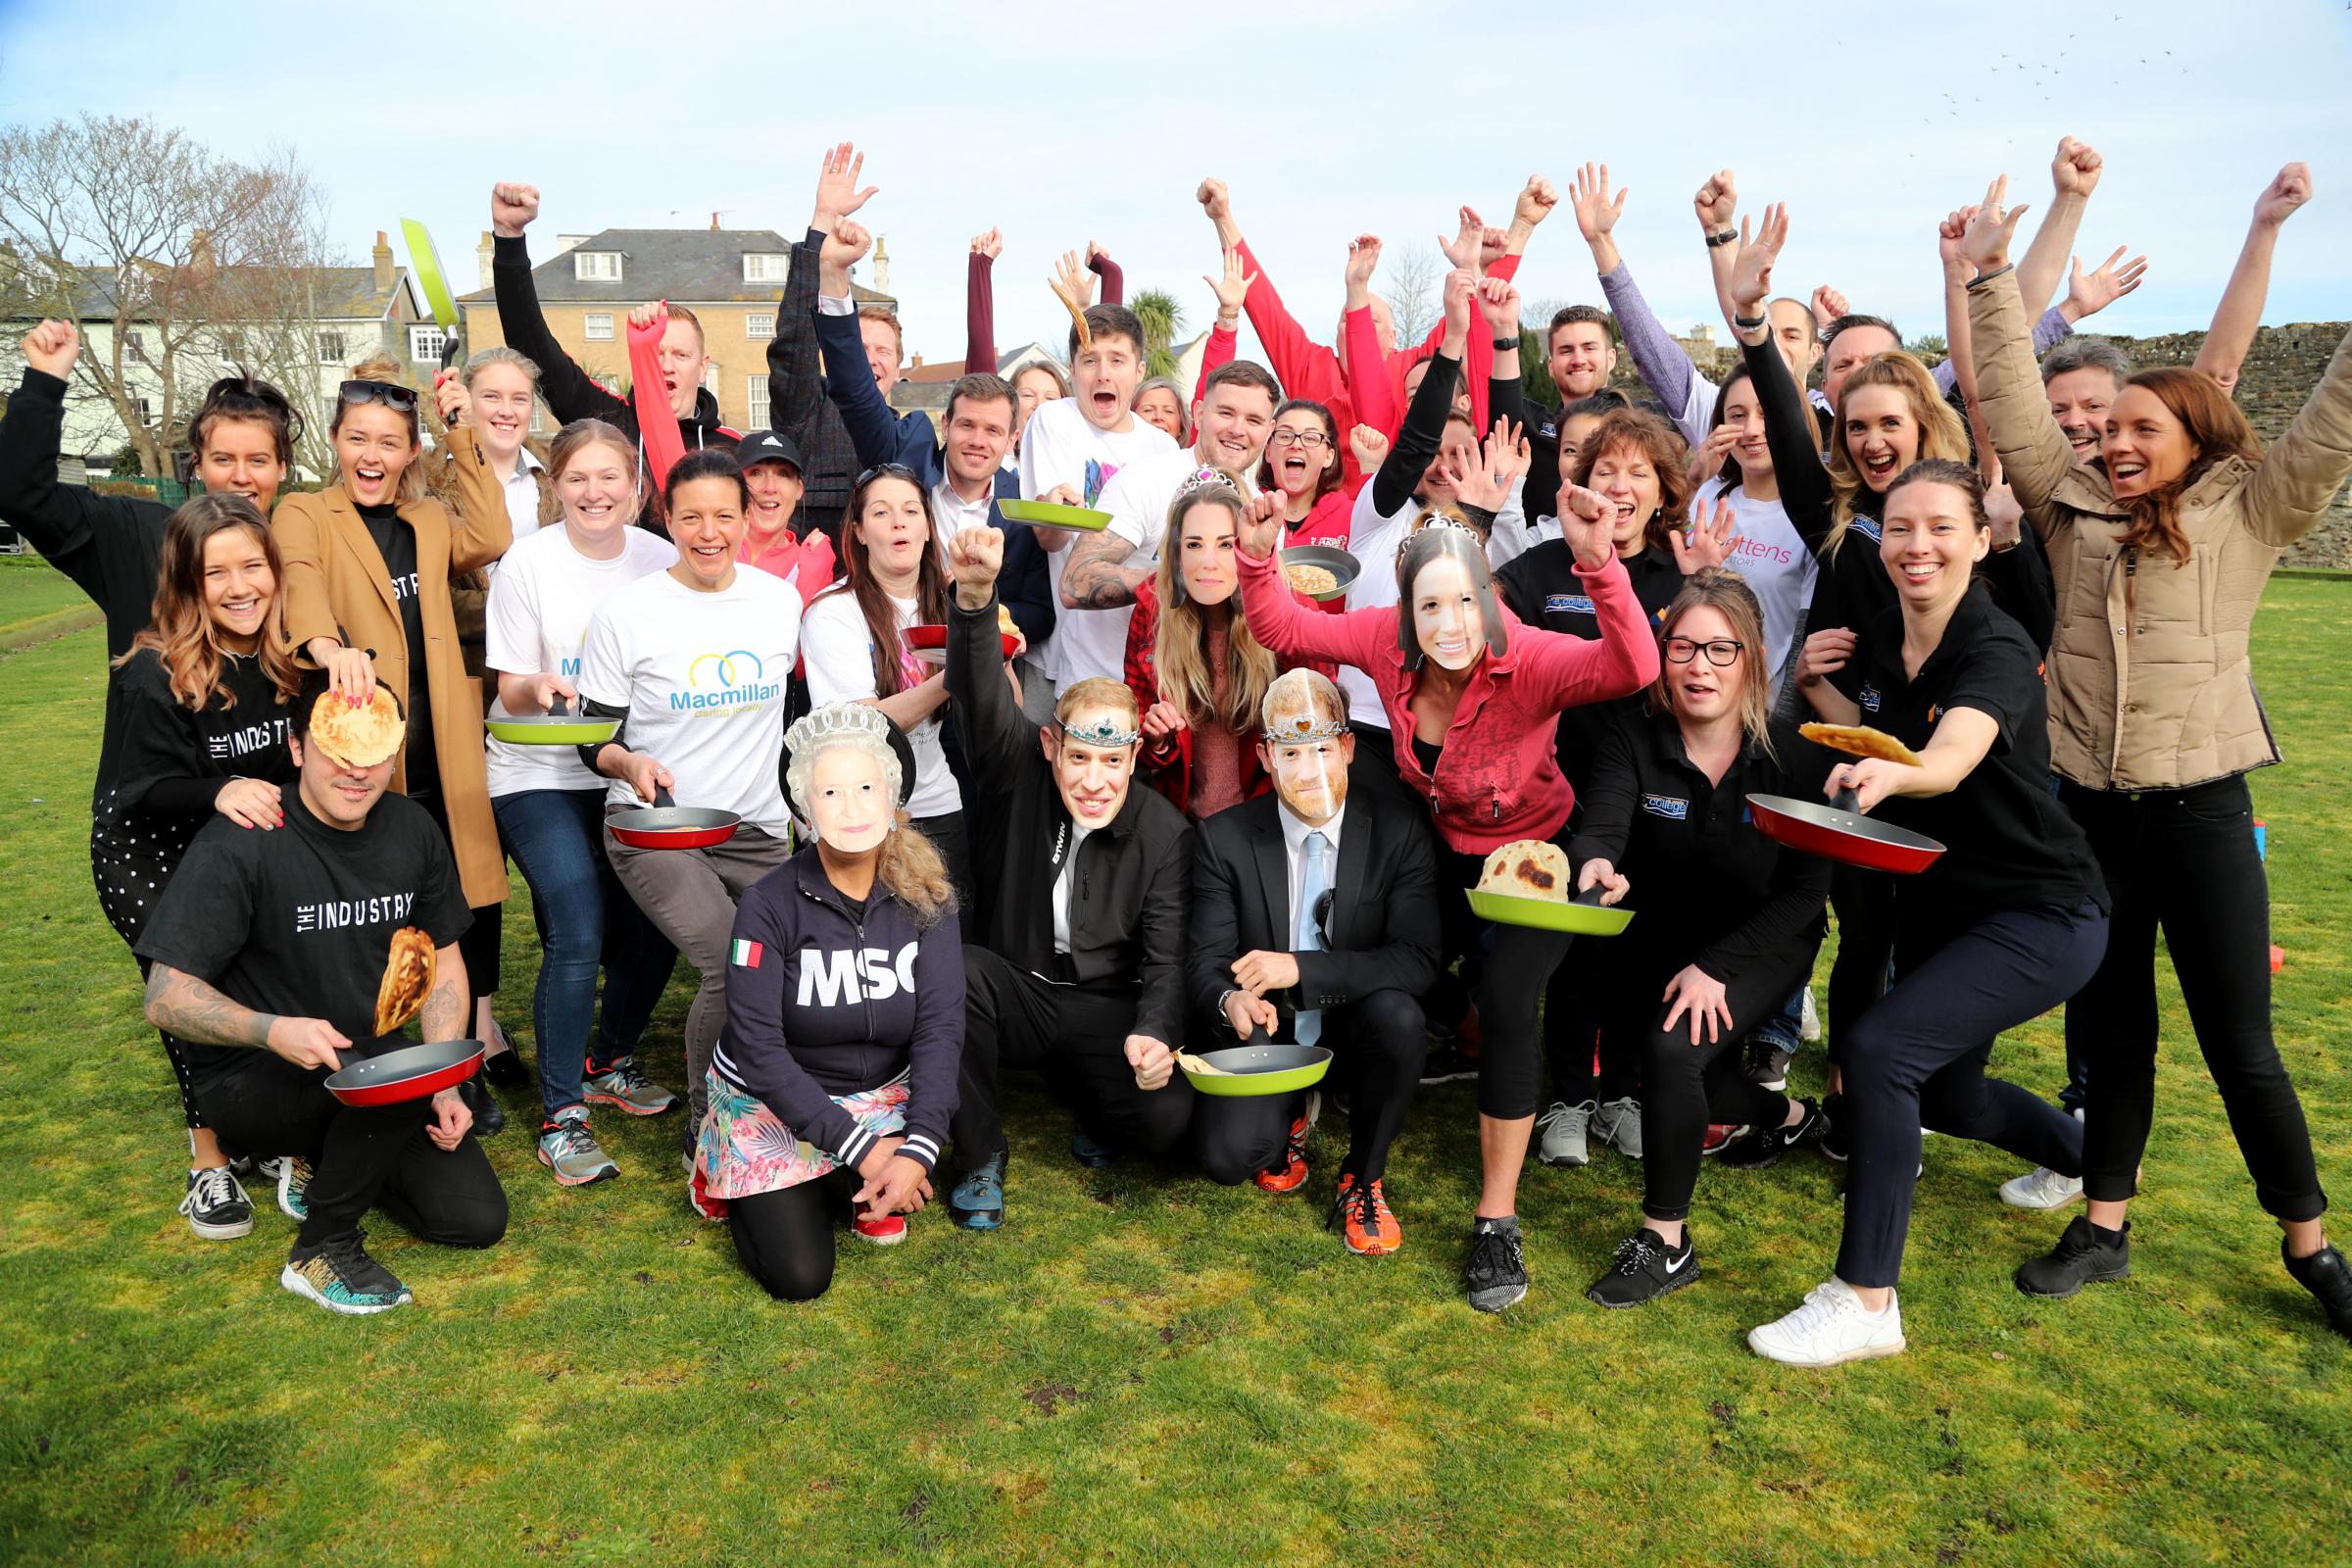 Long-running Christchurch pancake race set to return on Shrove Tuesday